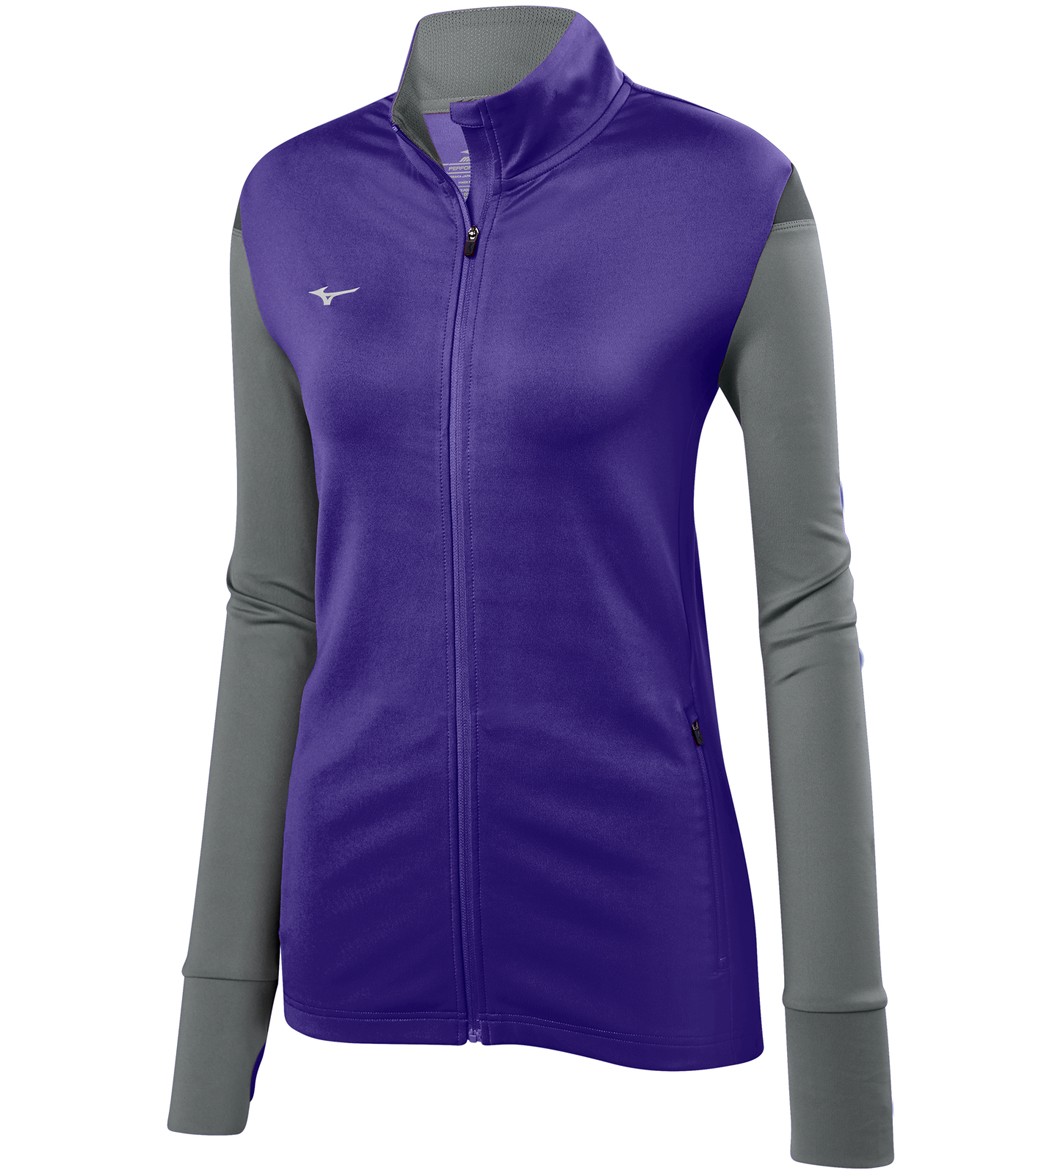 Mizuno Women's Horizon Full Zip Volleyball Jacket - Purple/Grey/Charcoal Medium - Swimoutlet.com